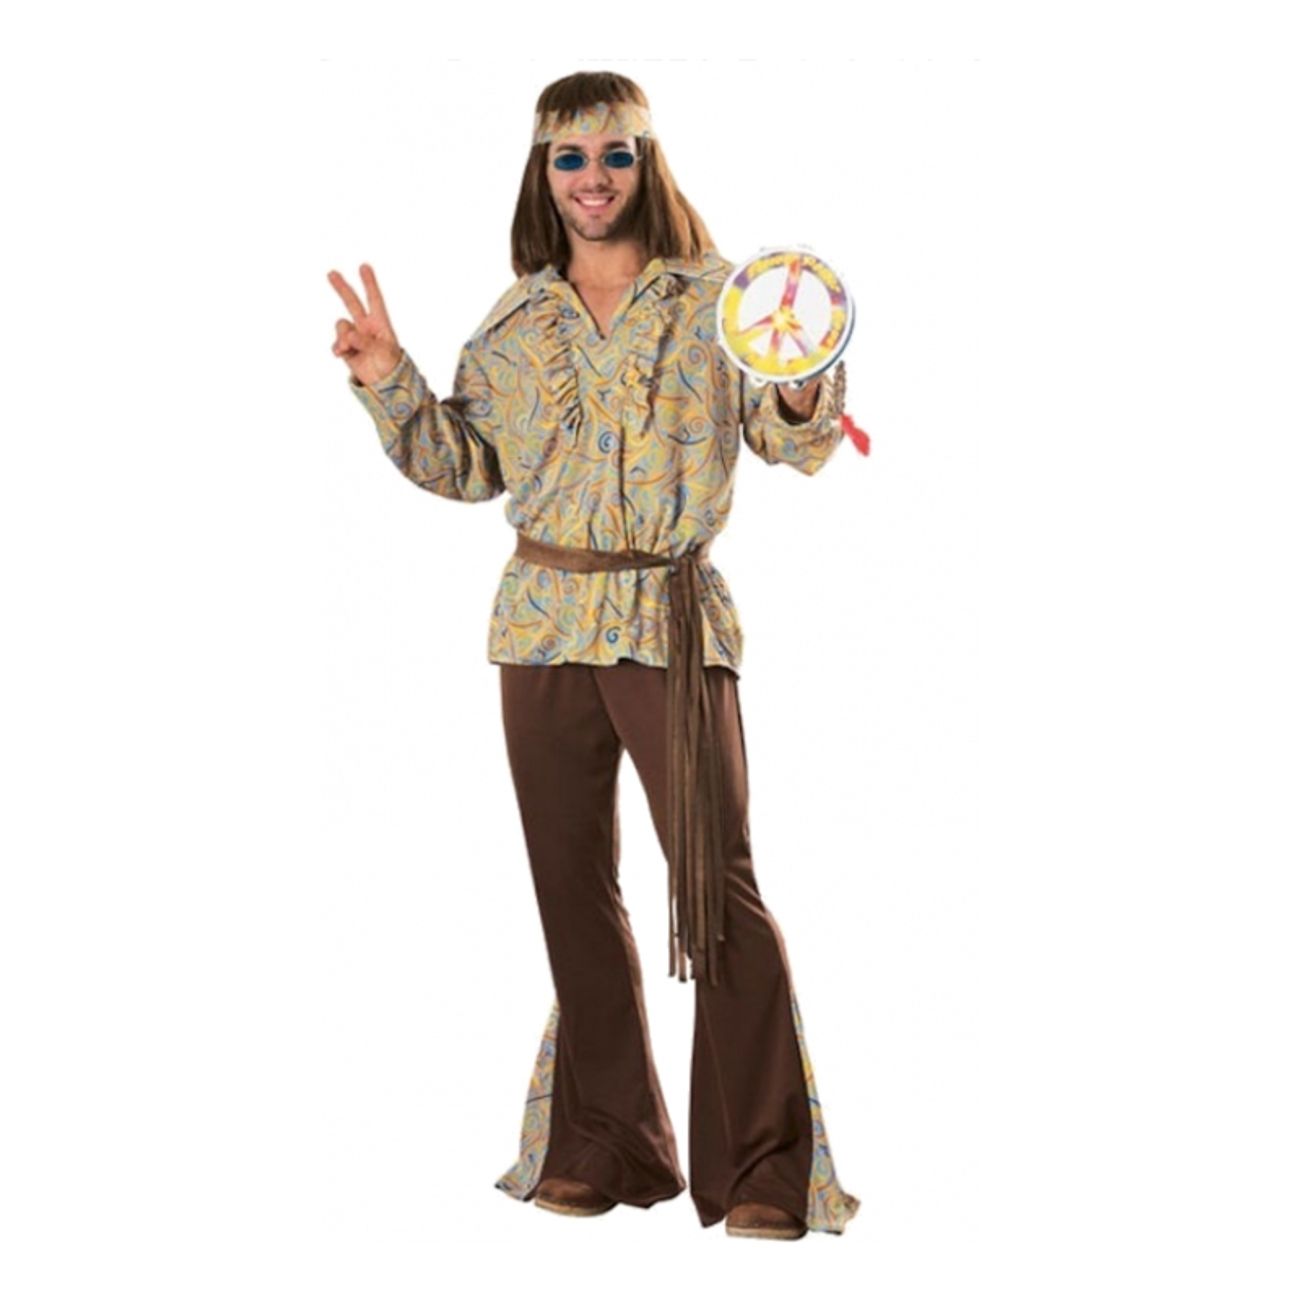 mod-marvin-hippie-costume-chest-42-1